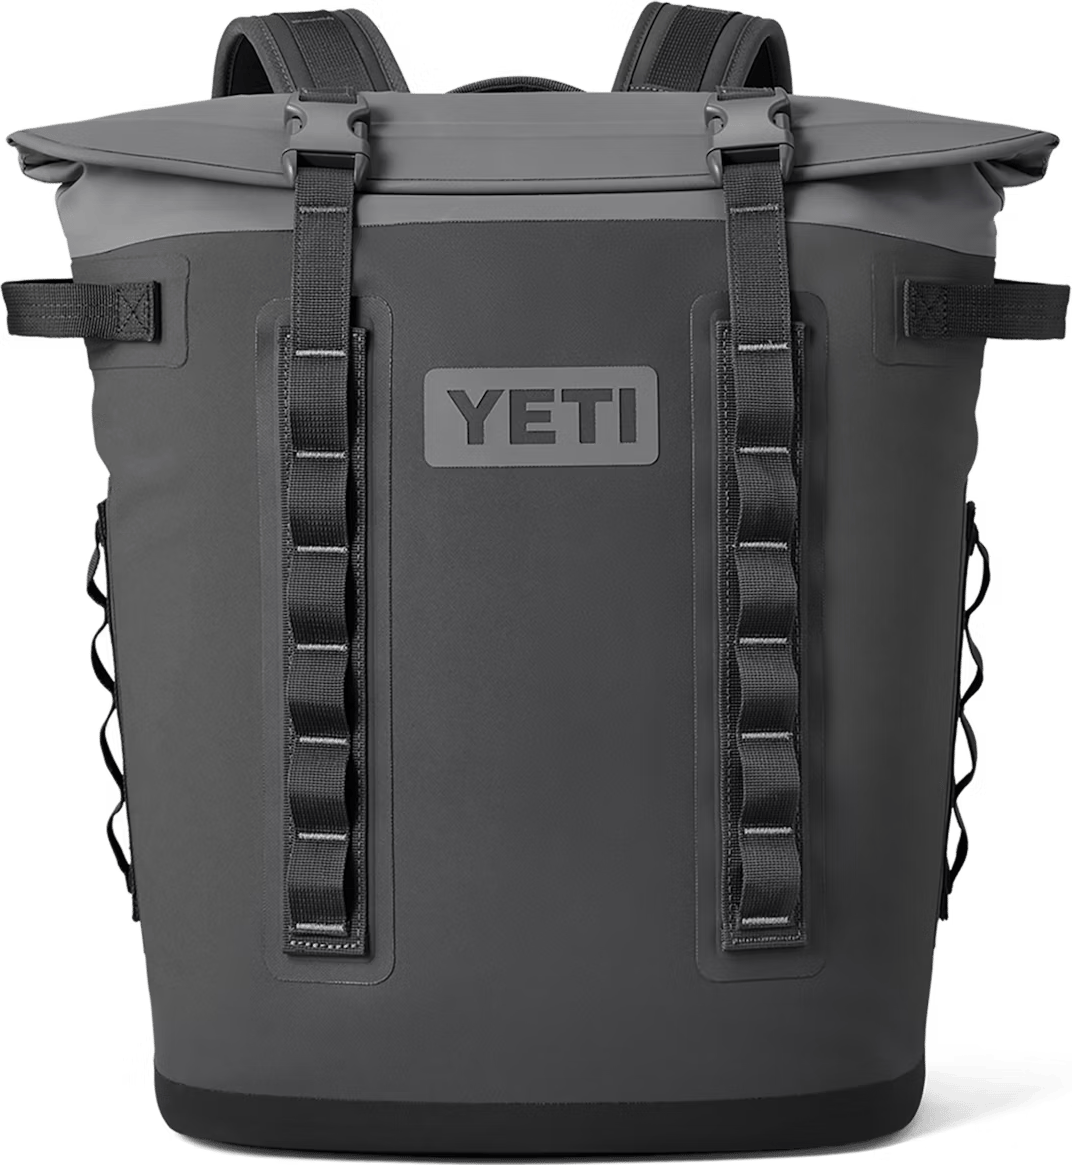 Yeti Hopper Backpack M20 Soft Cooler Charcoal